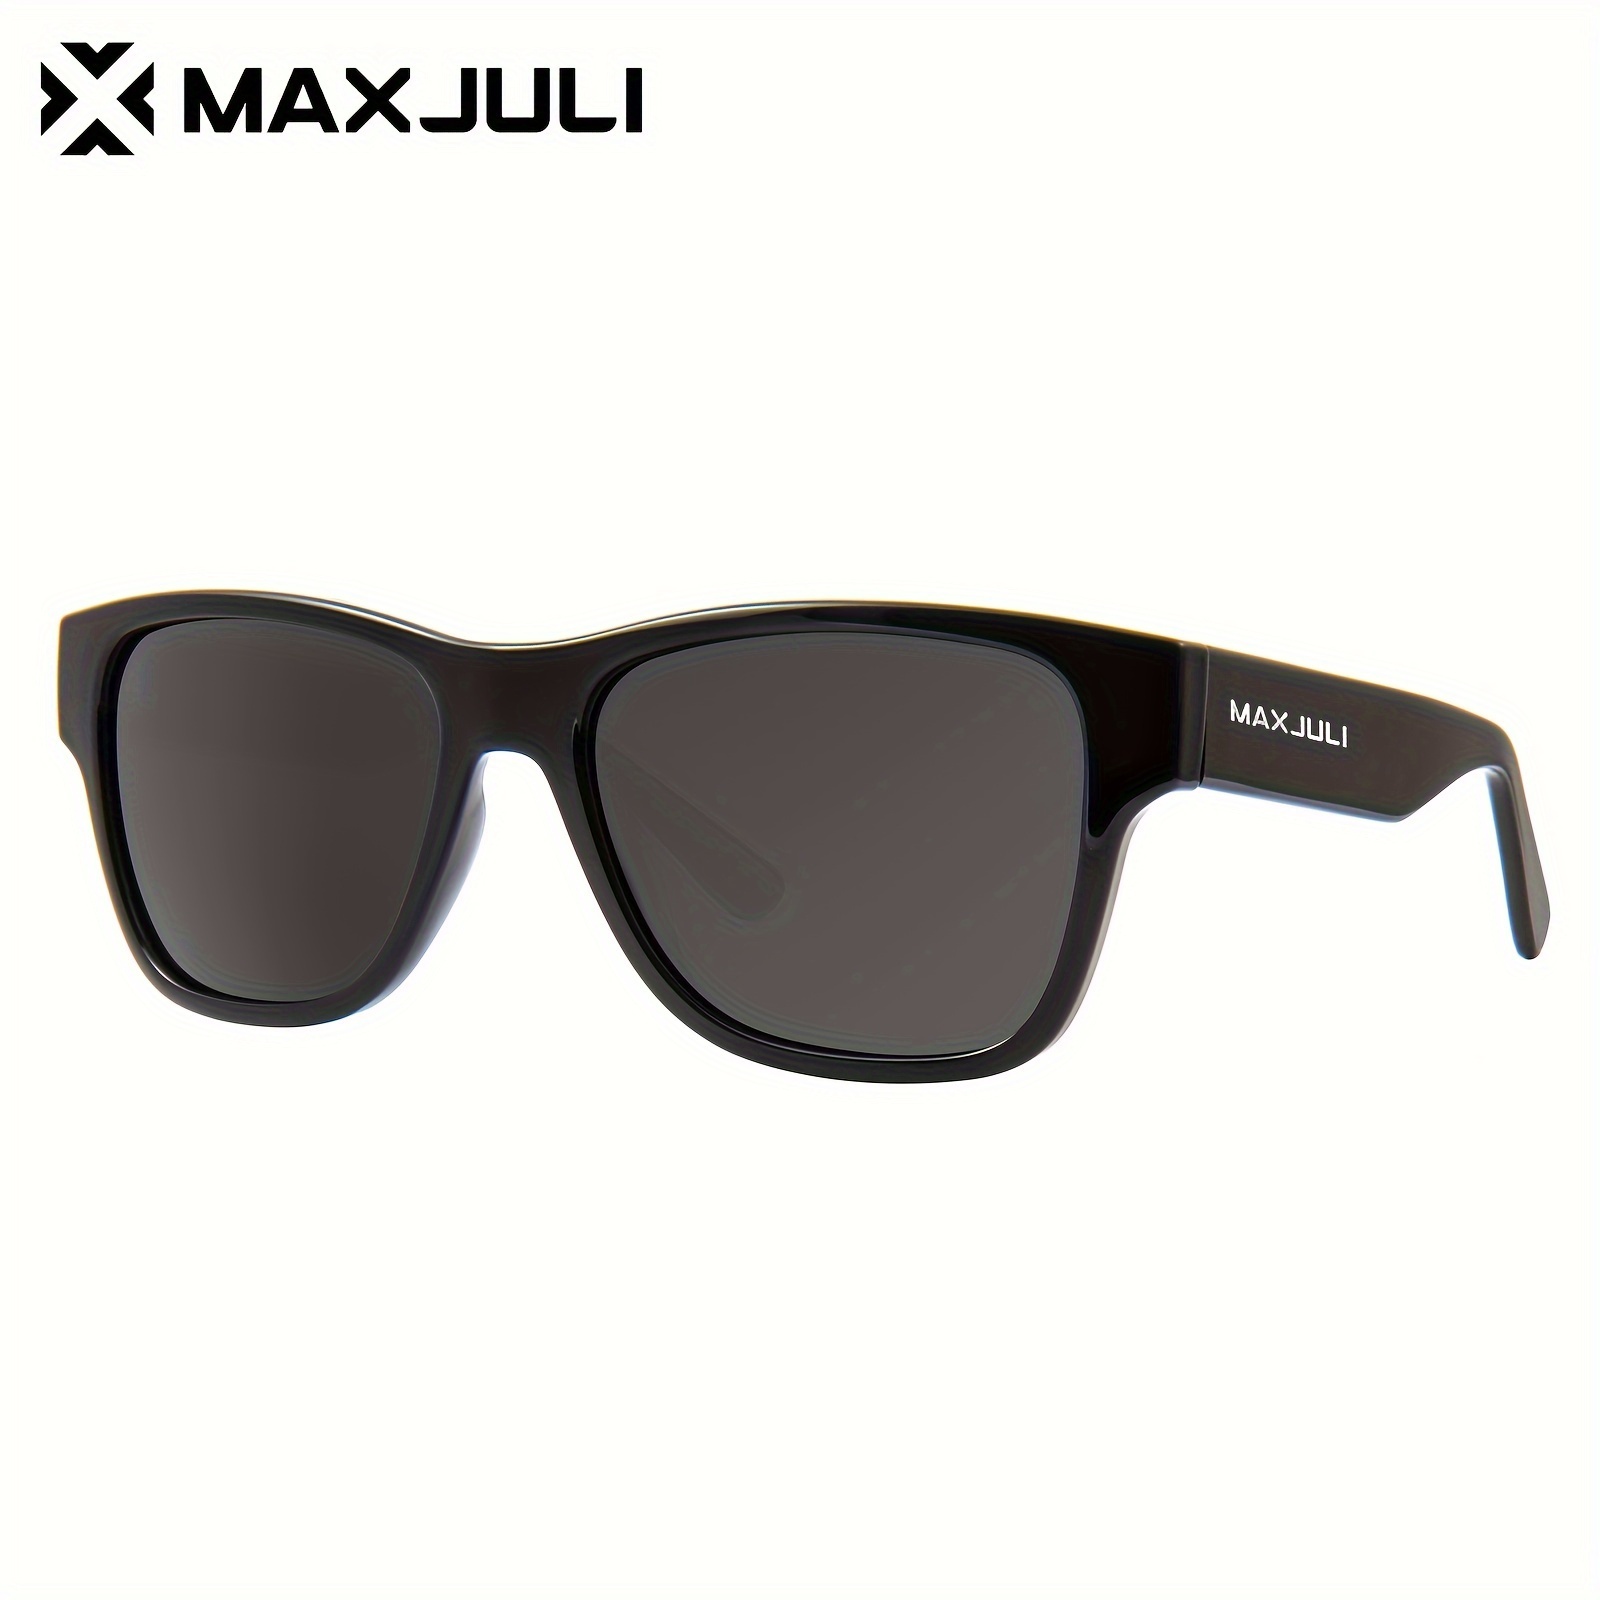 Maxjuli Xxl Extra Large Polarized Sunglasses For Big Heads Men